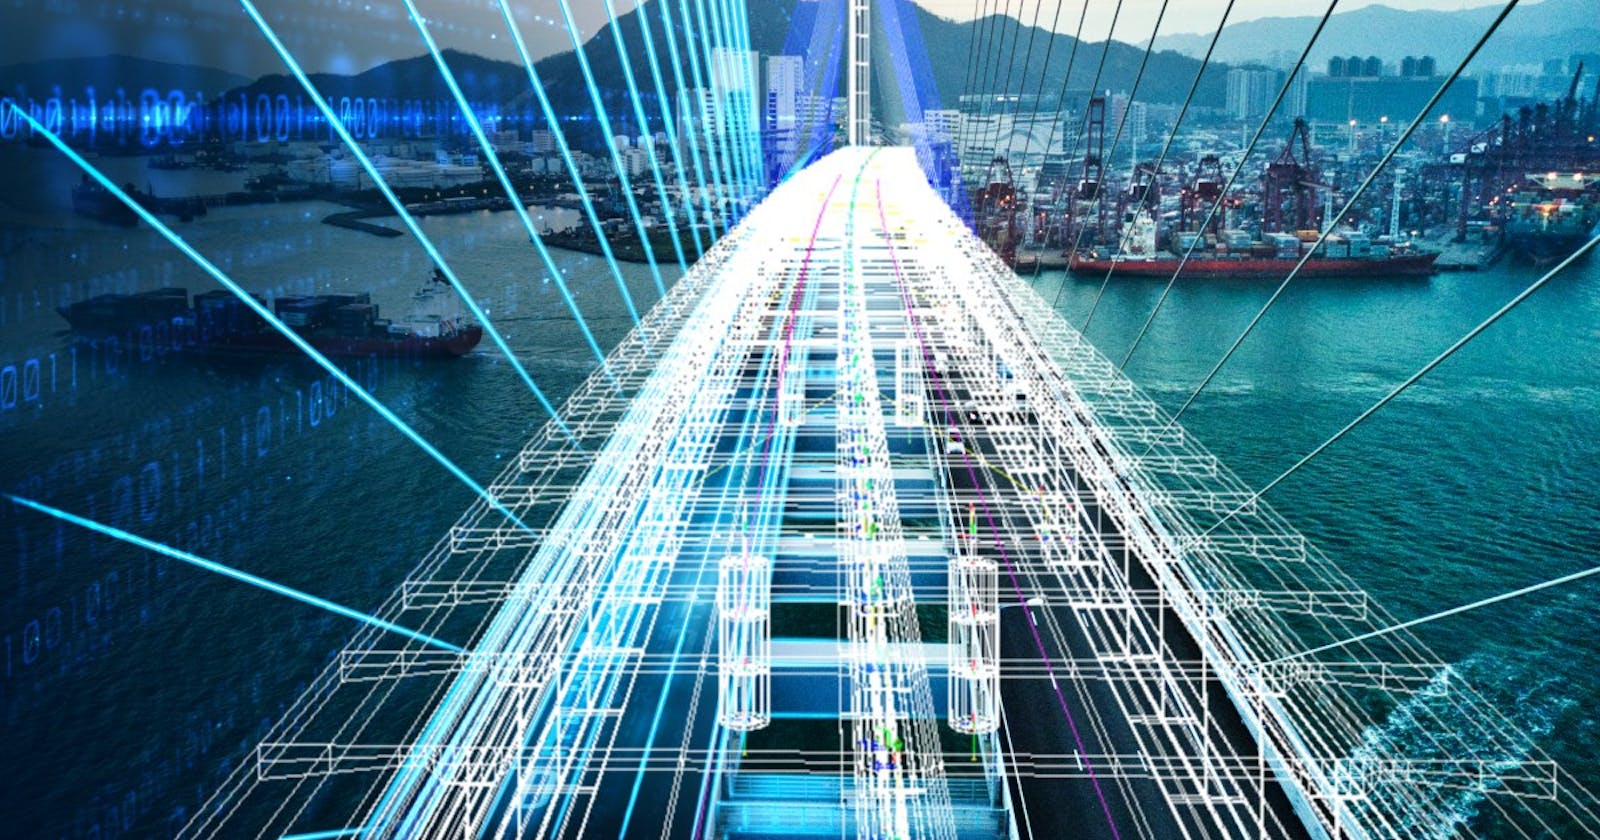 Are Cross-Chain Bridges Worth The Risk?